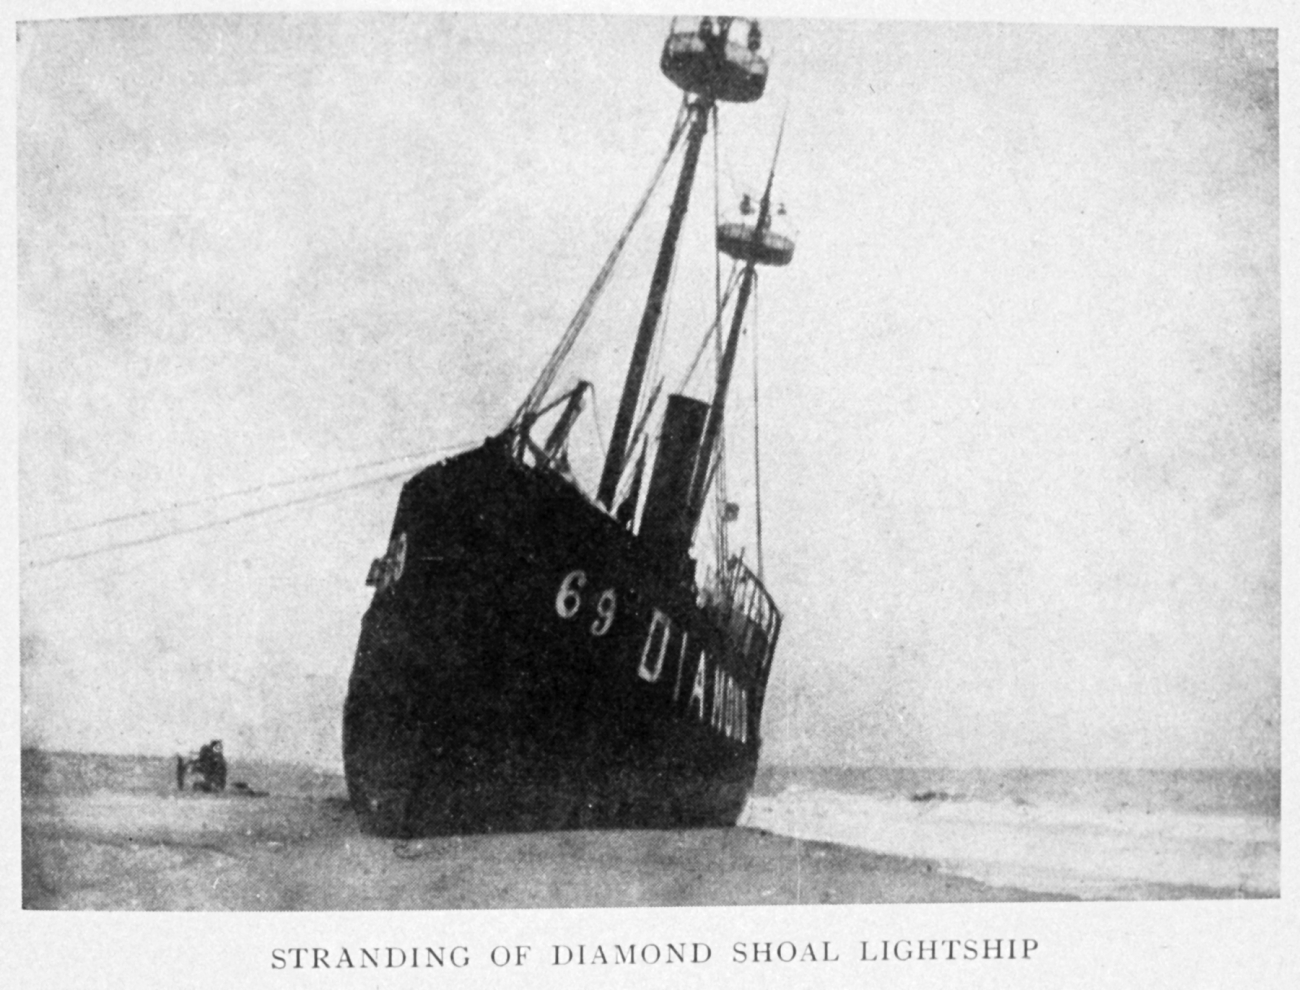 Stranding of Diamond Shoal Lightship